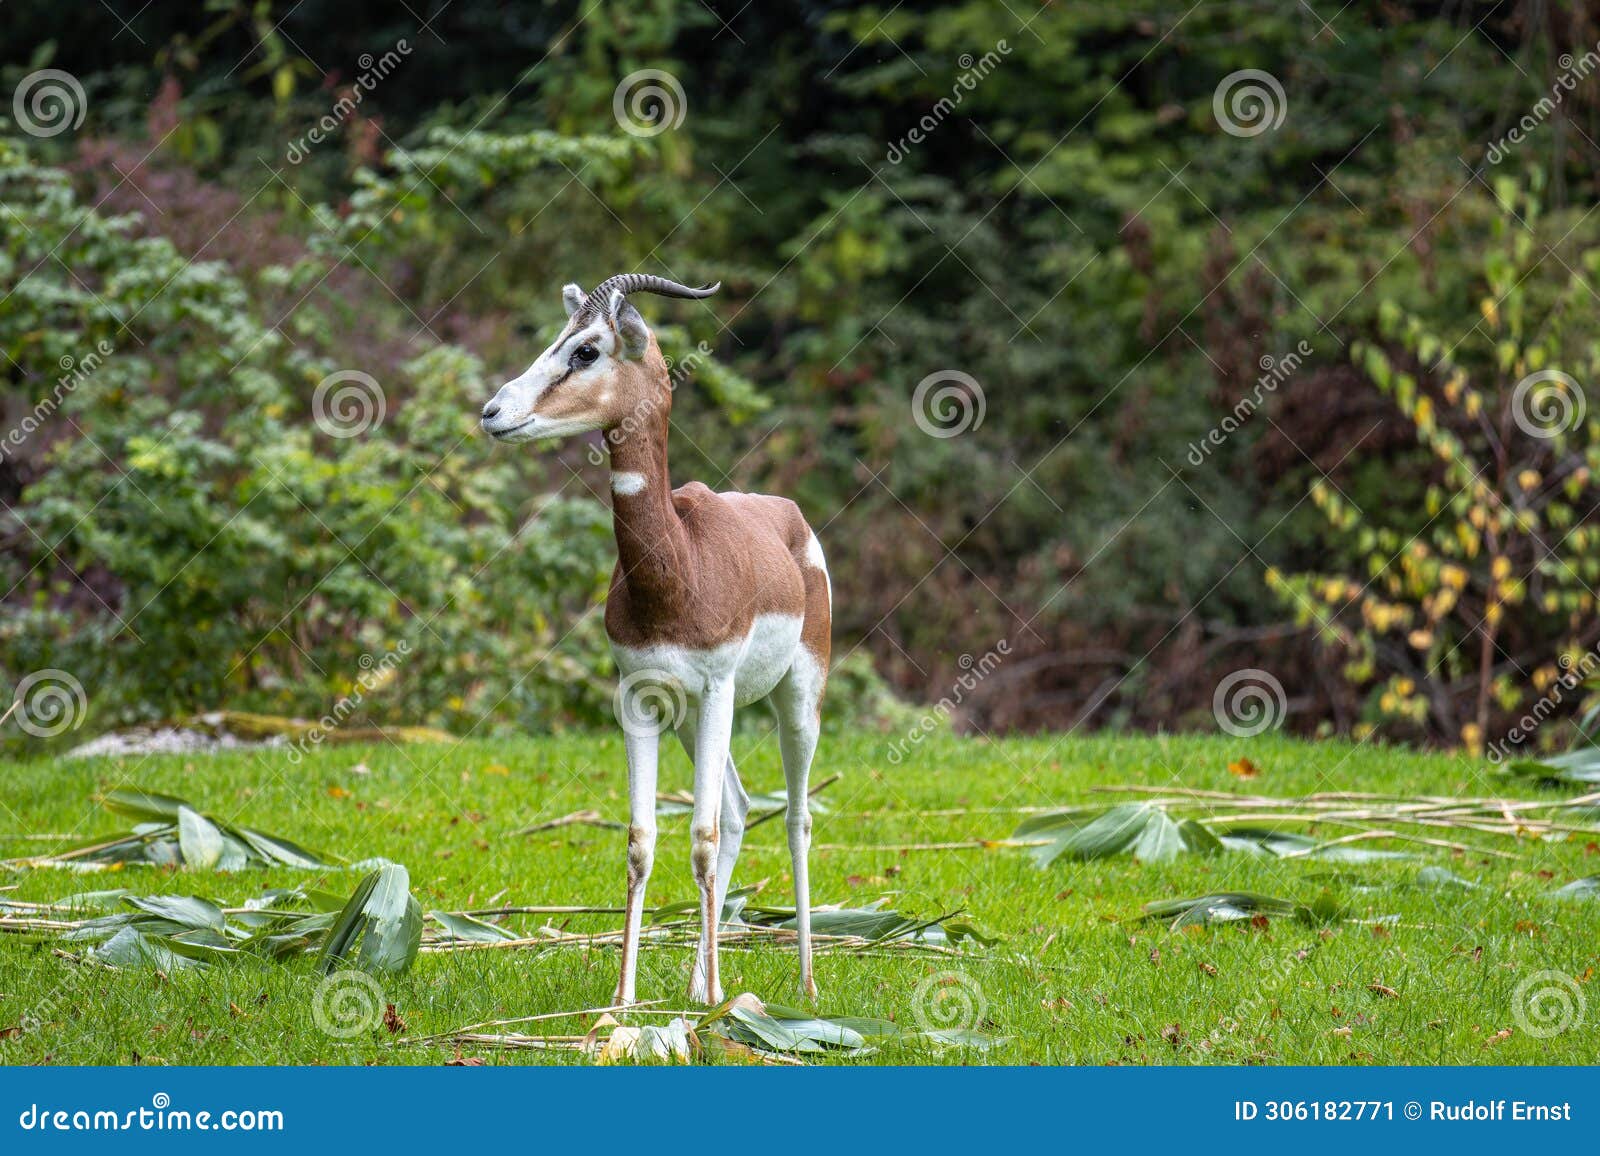 dama gazelle, gazella dama mhorr or mhorr gazelle is a species of gazelle